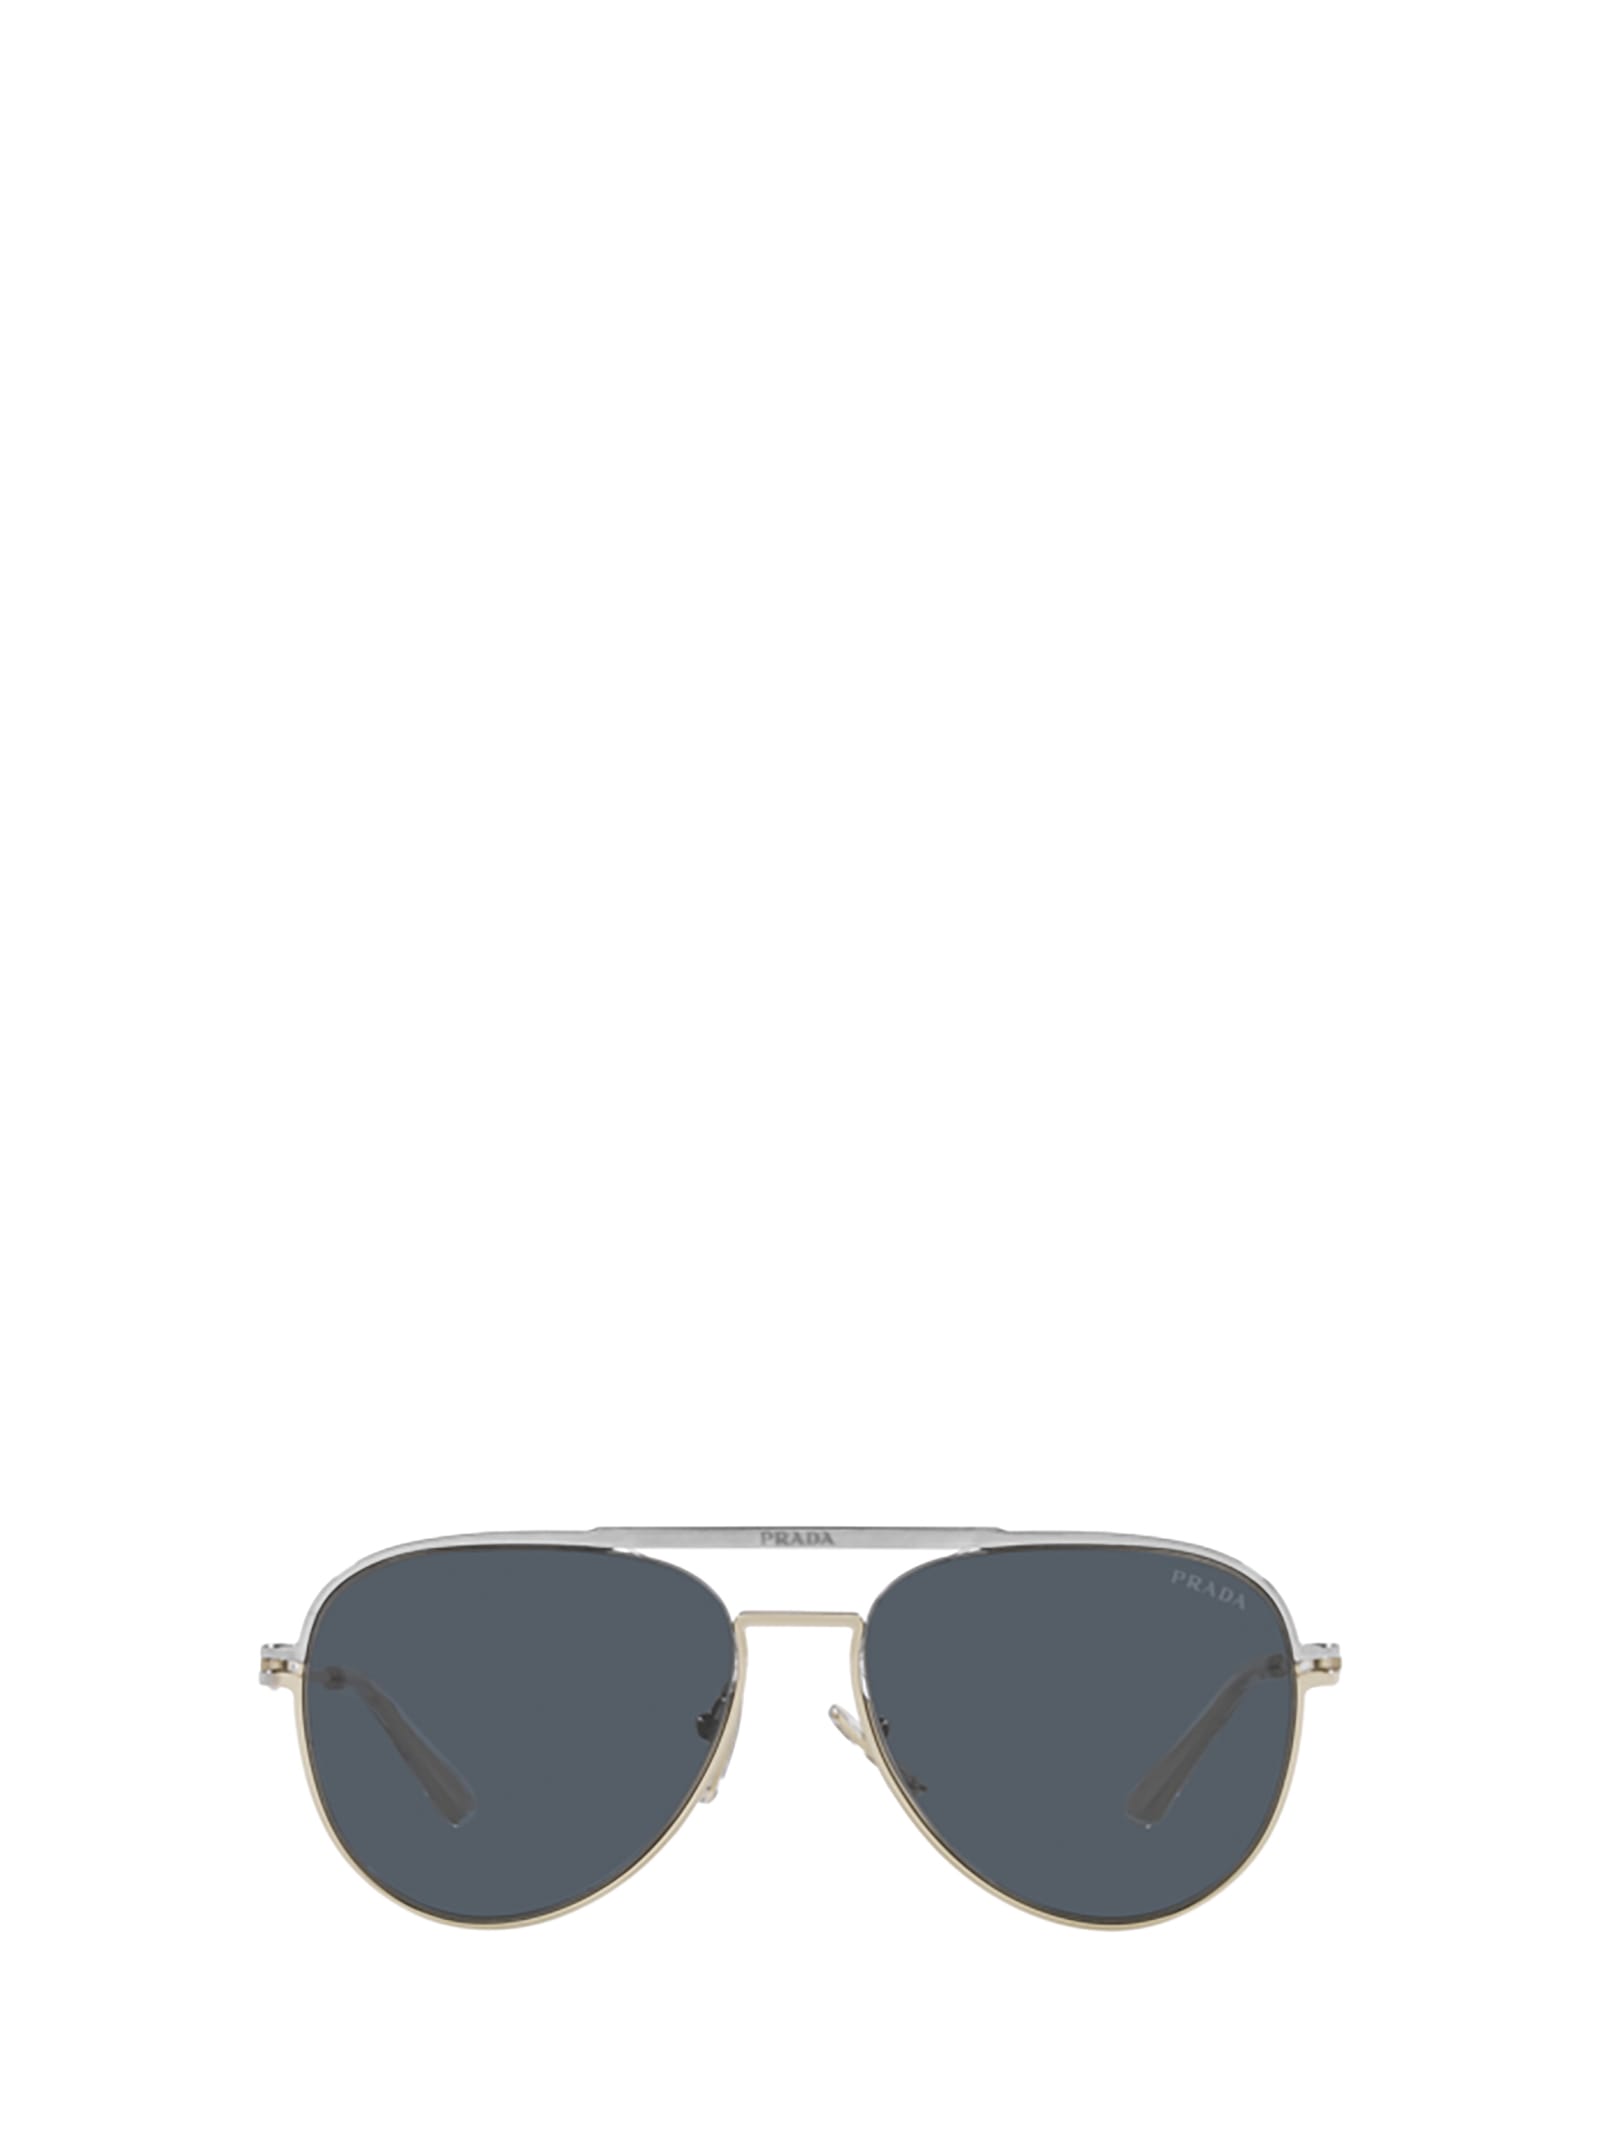 Prada Pr 54zs Silver / Pale Gold Sunglasses